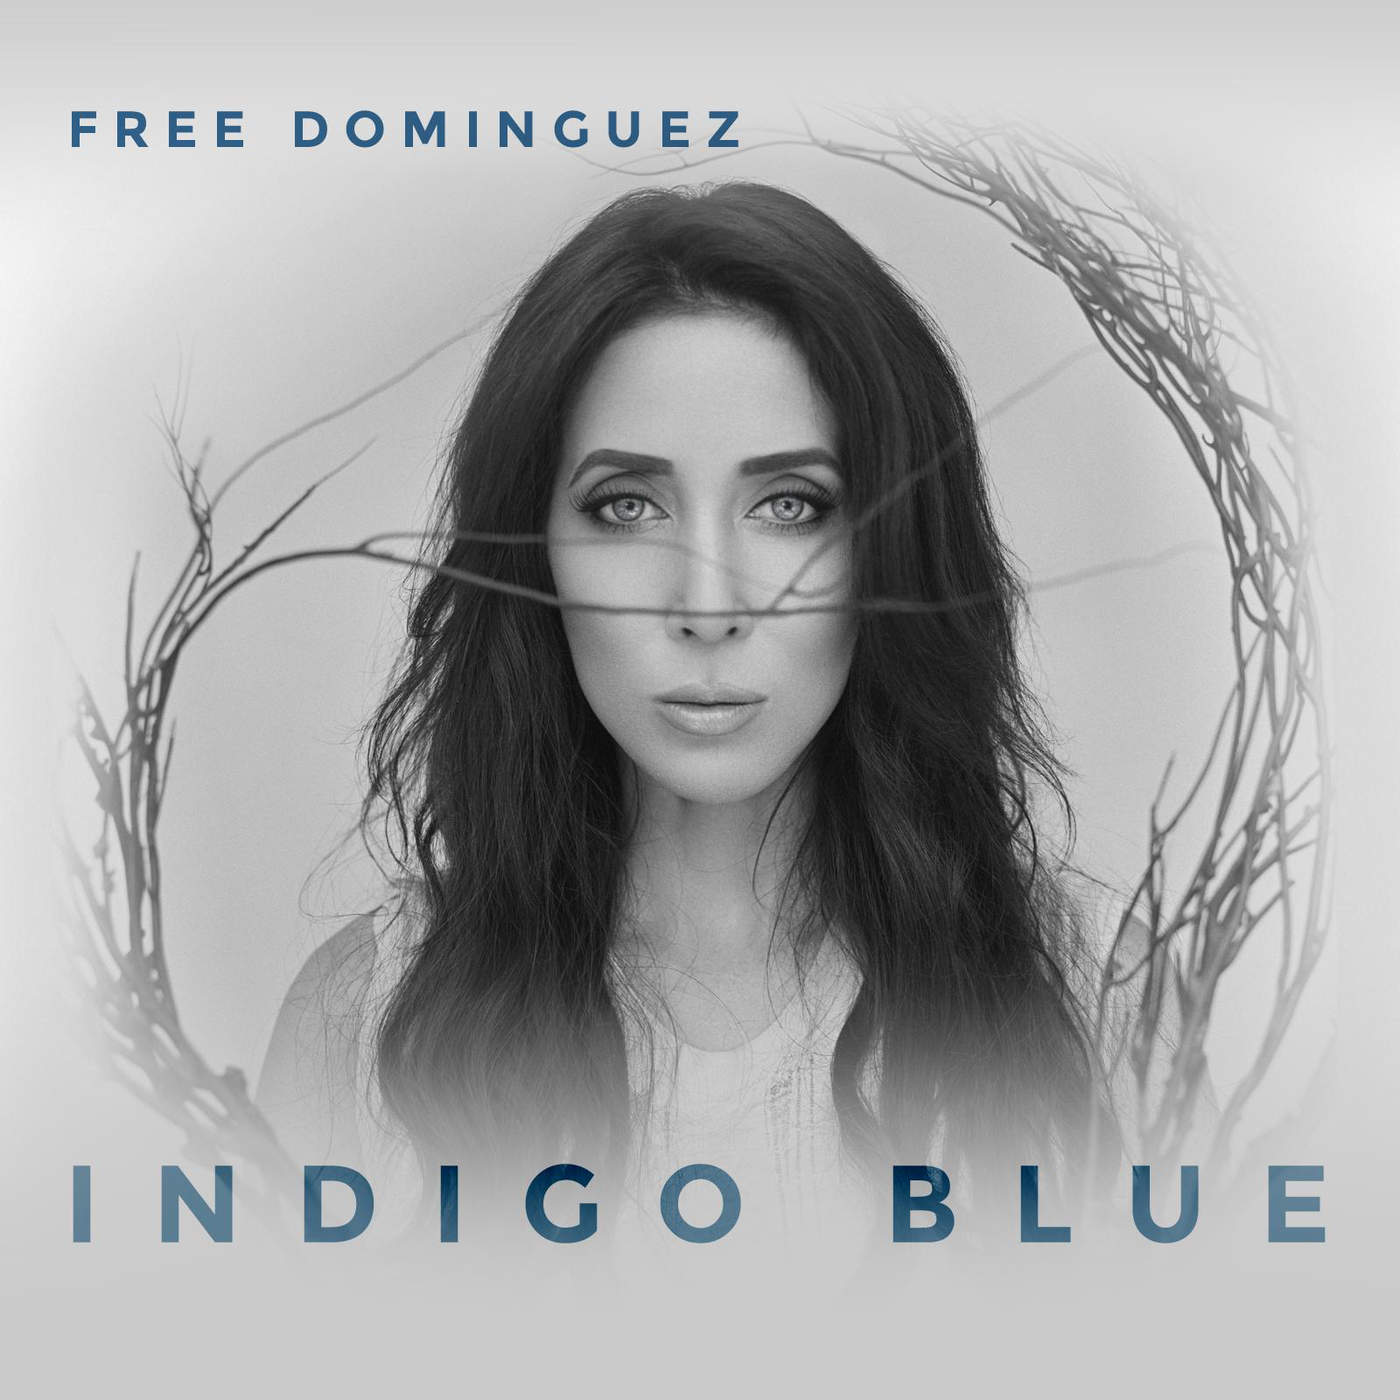 Free Dominguez - Indigo Blue (2015) Album Info